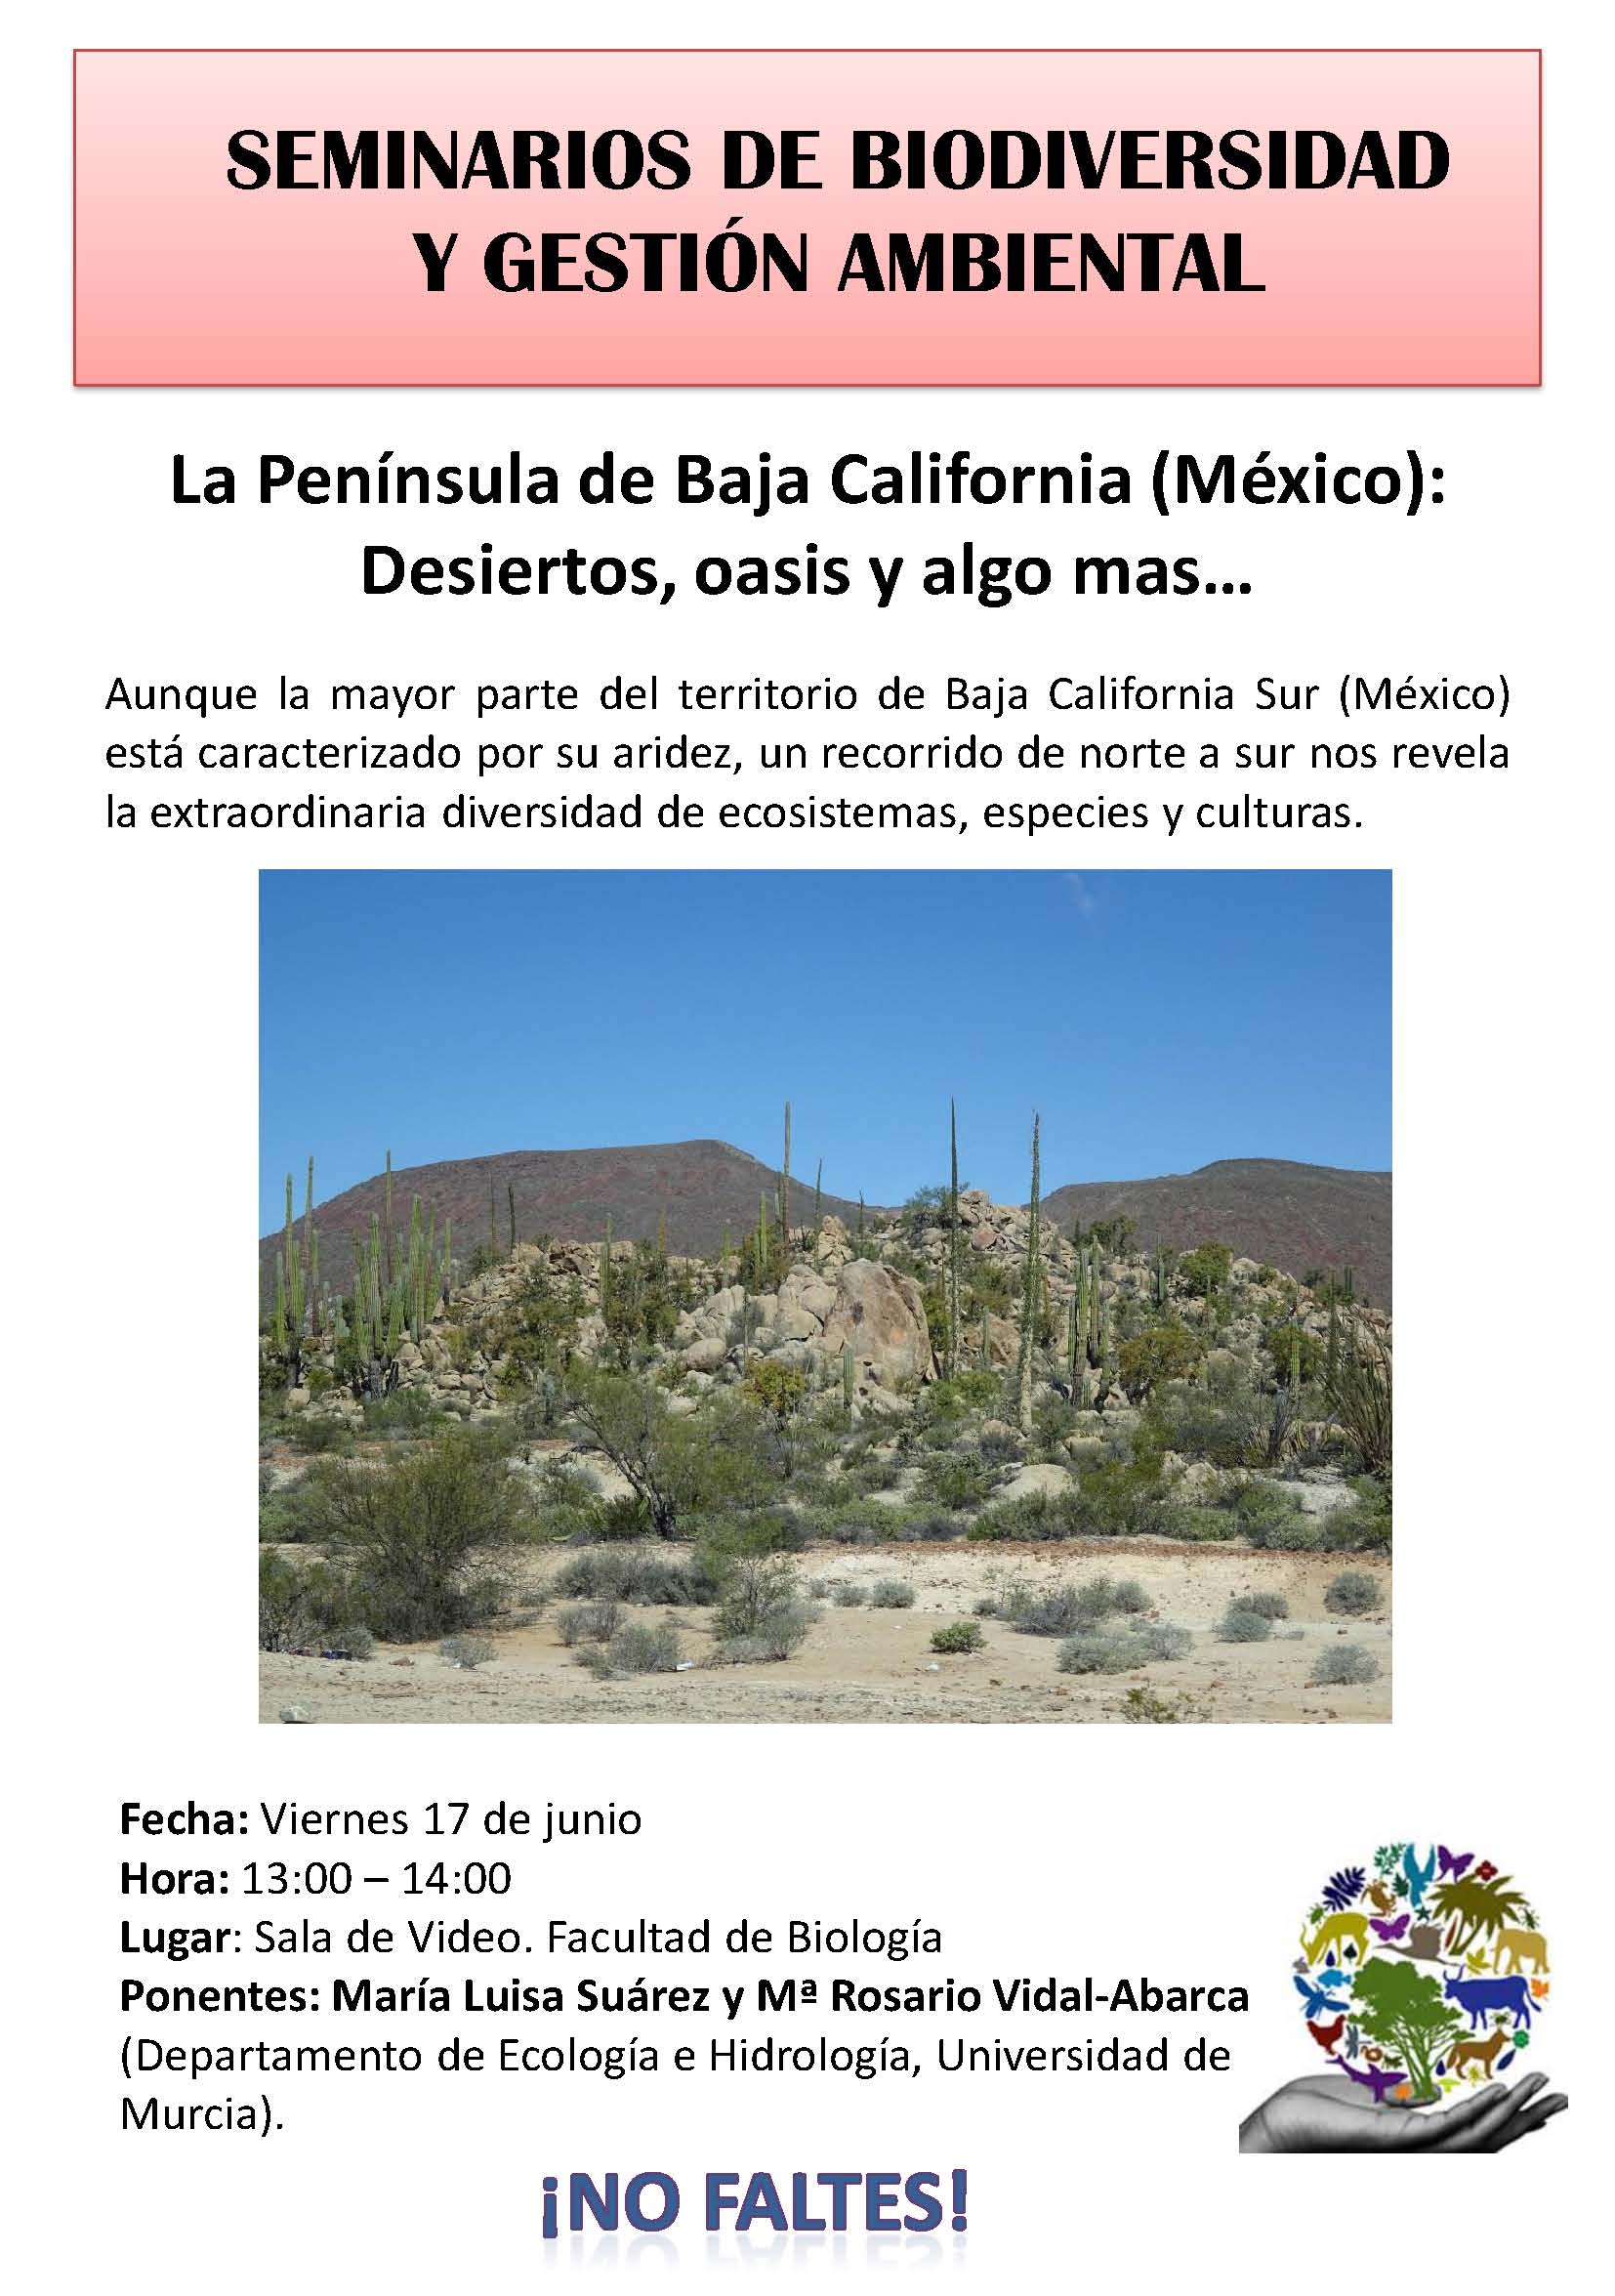 Charla sobre la Baja California (México) en la UMU